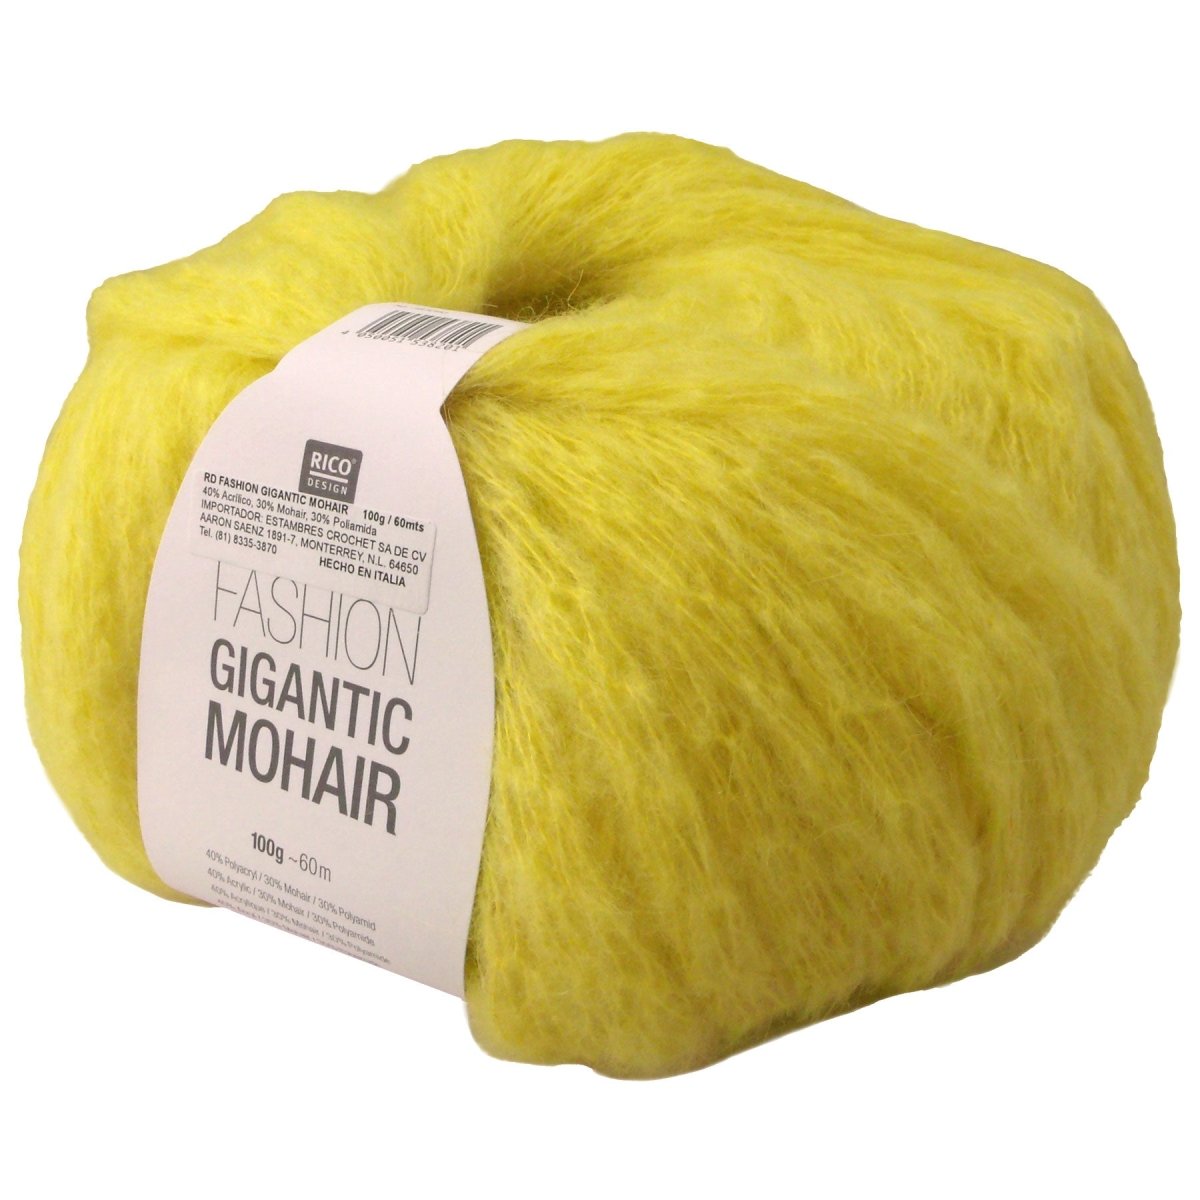 FASHION GIGANTIC MOHAIR - Crochetstores383090-0114050051538201